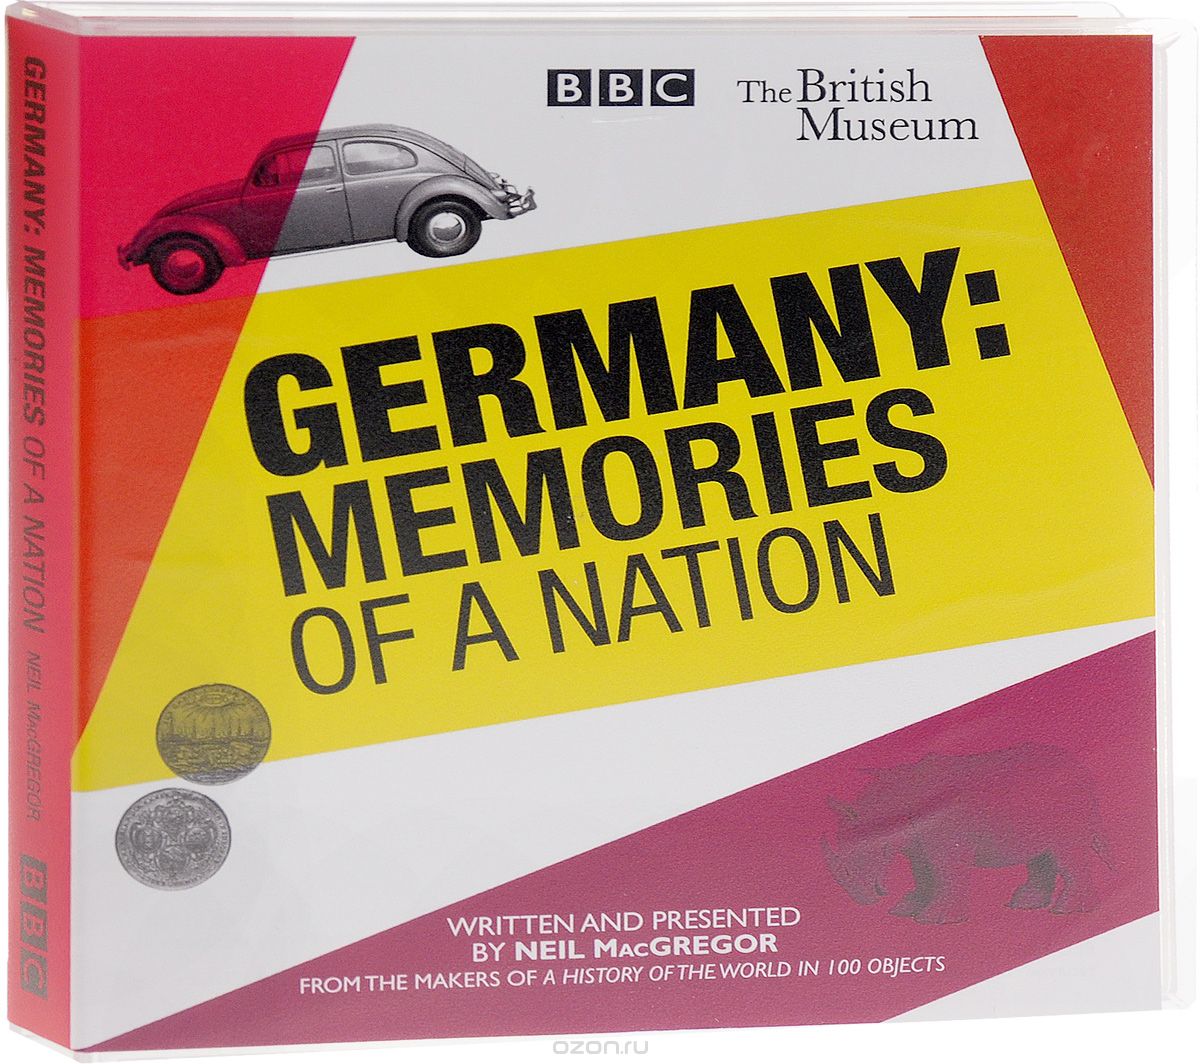 Скачать книгу "Germany: The Memories of a Nation"